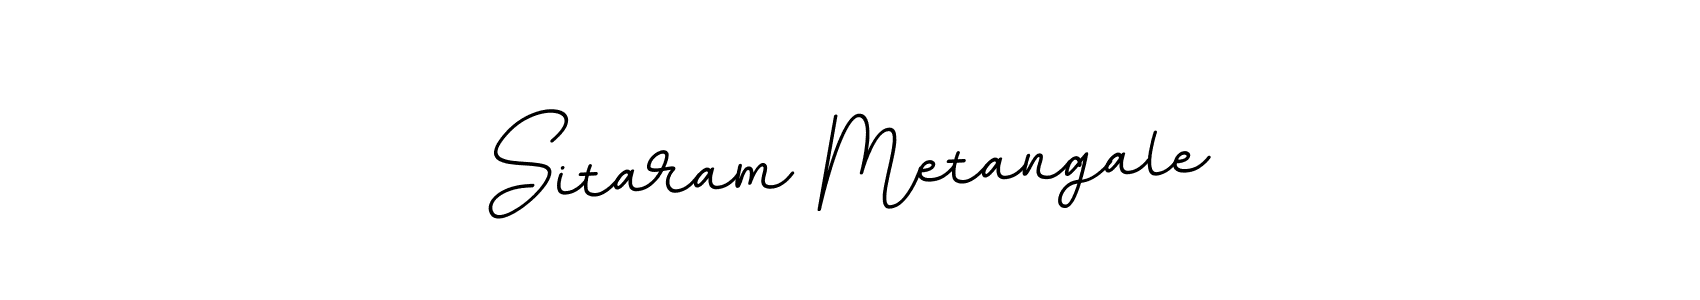 How to Draw Sitaram Metangale signature style? BallpointsItalic-DORy9 is a latest design signature styles for name Sitaram Metangale. Sitaram Metangale signature style 11 images and pictures png